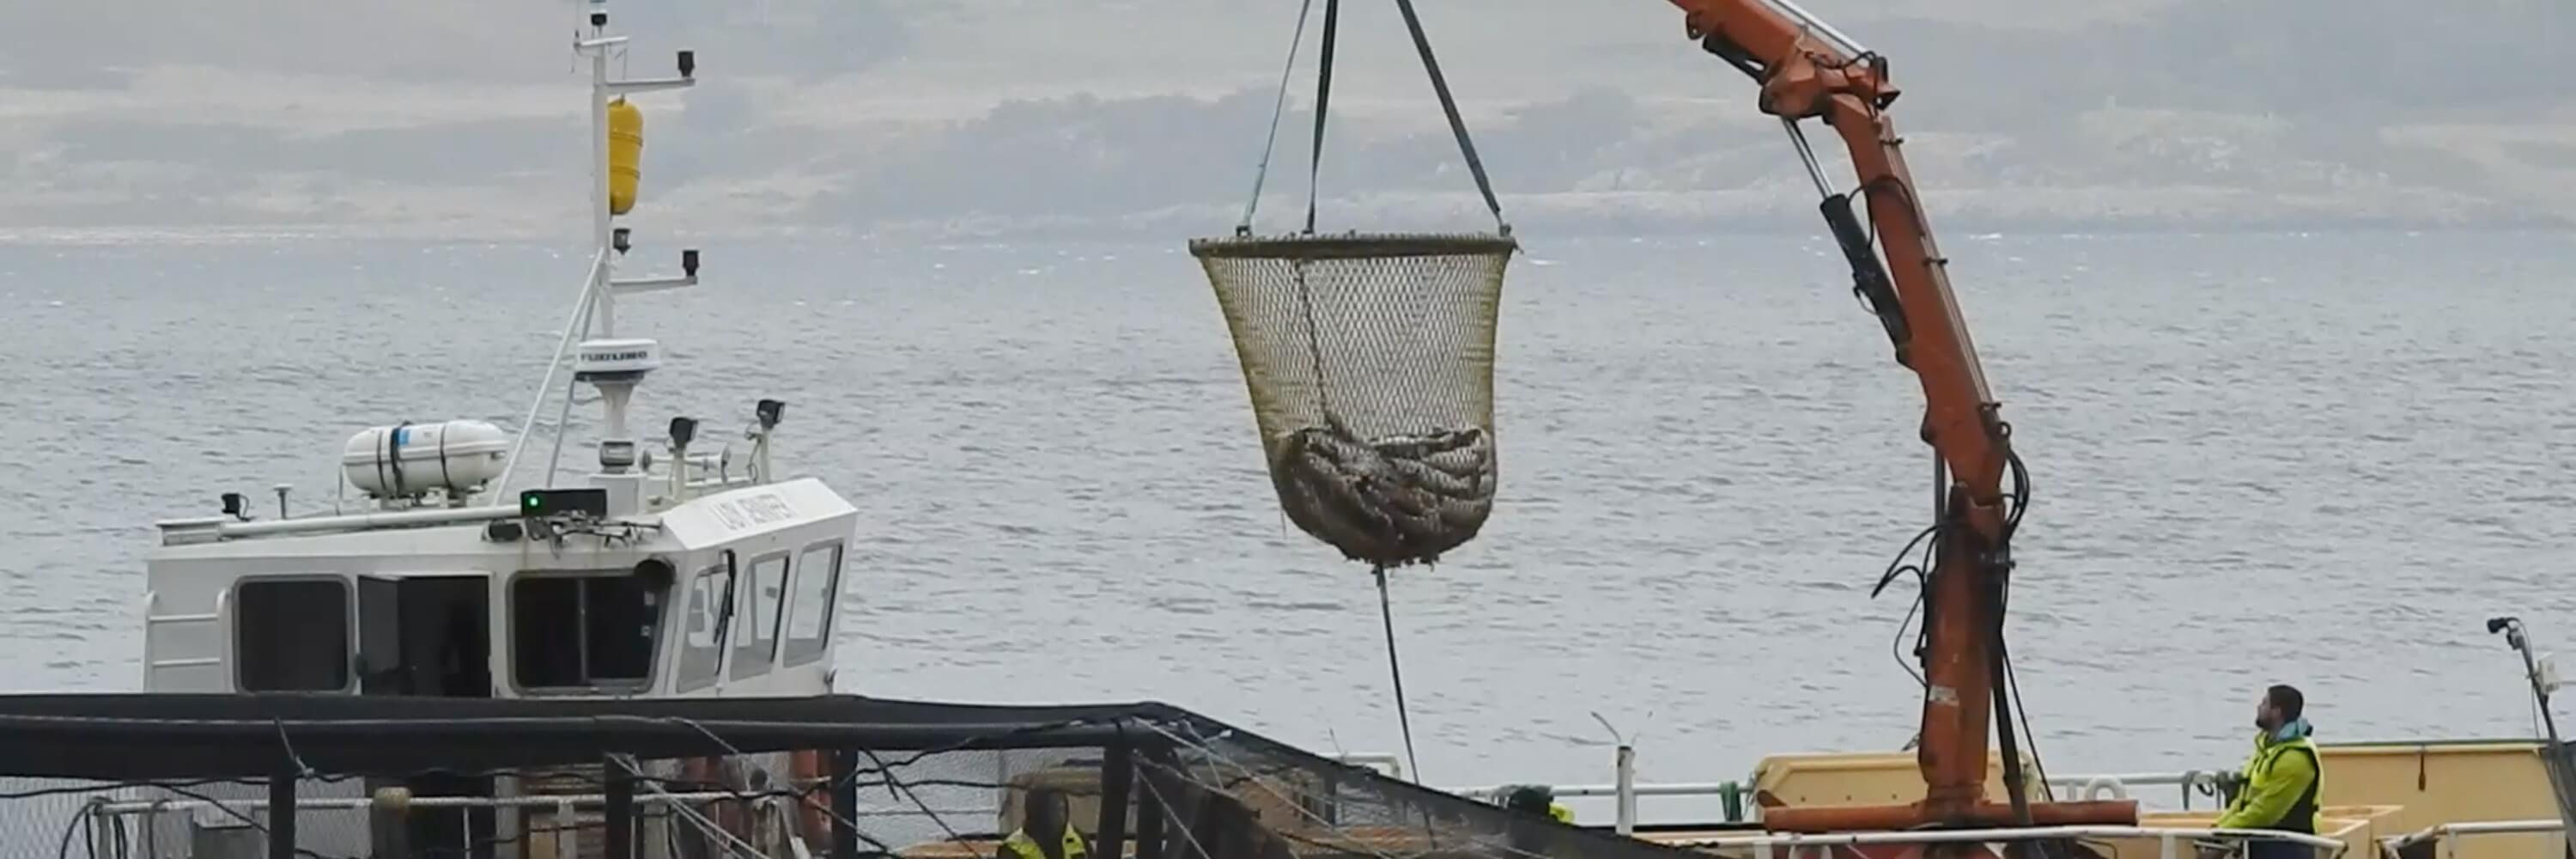 scottish salmon premature death fish industry